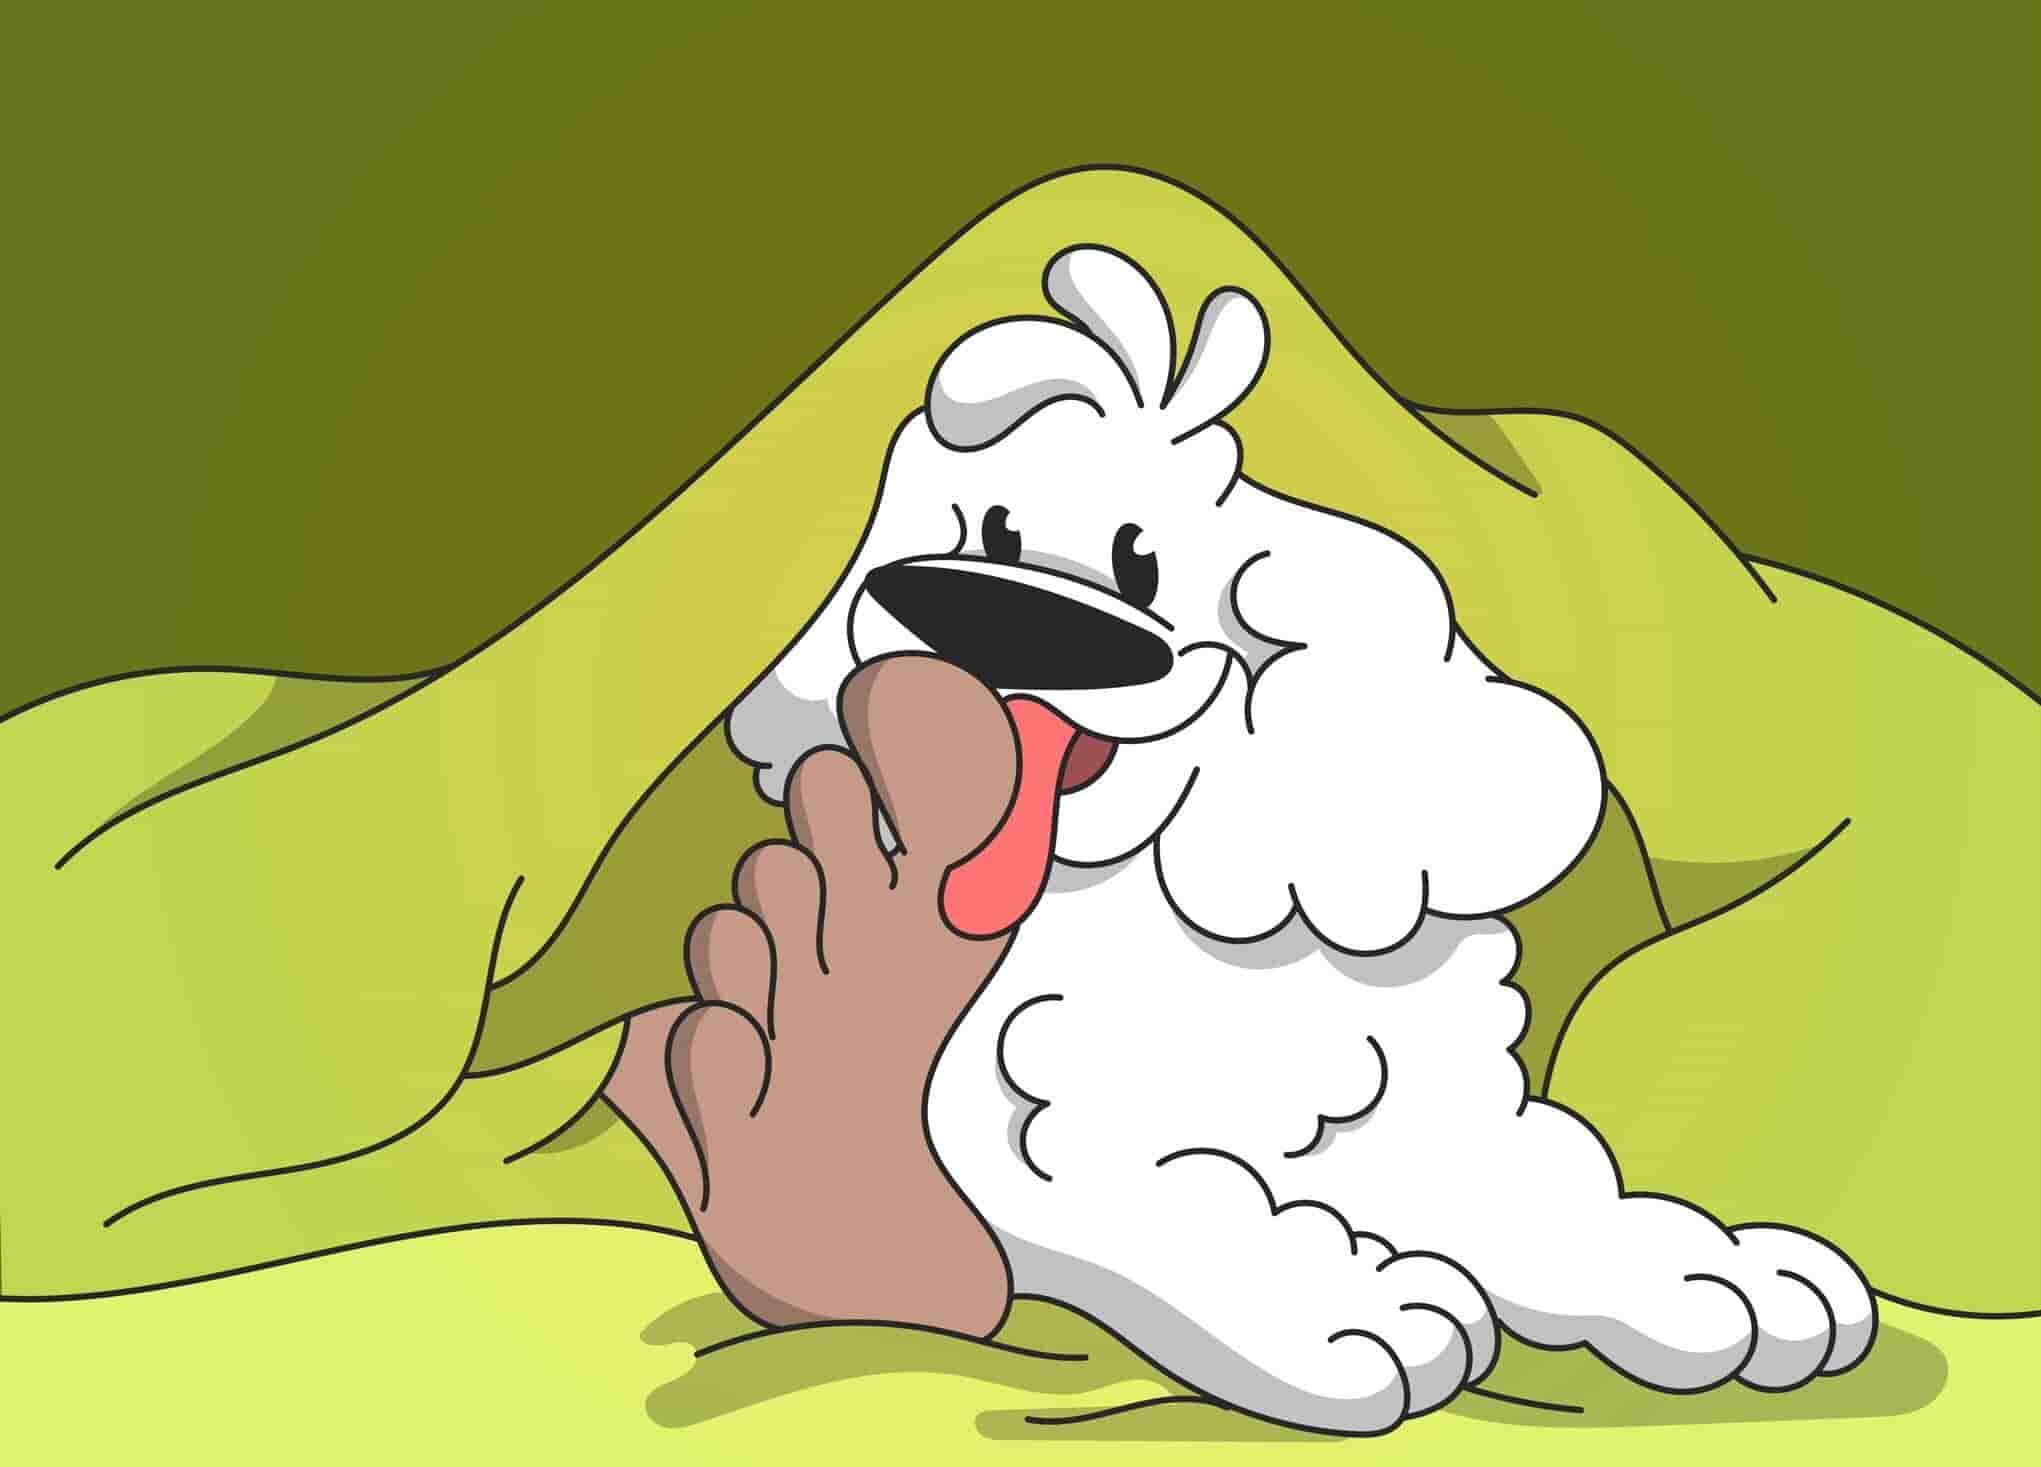 Cartoon feet licking